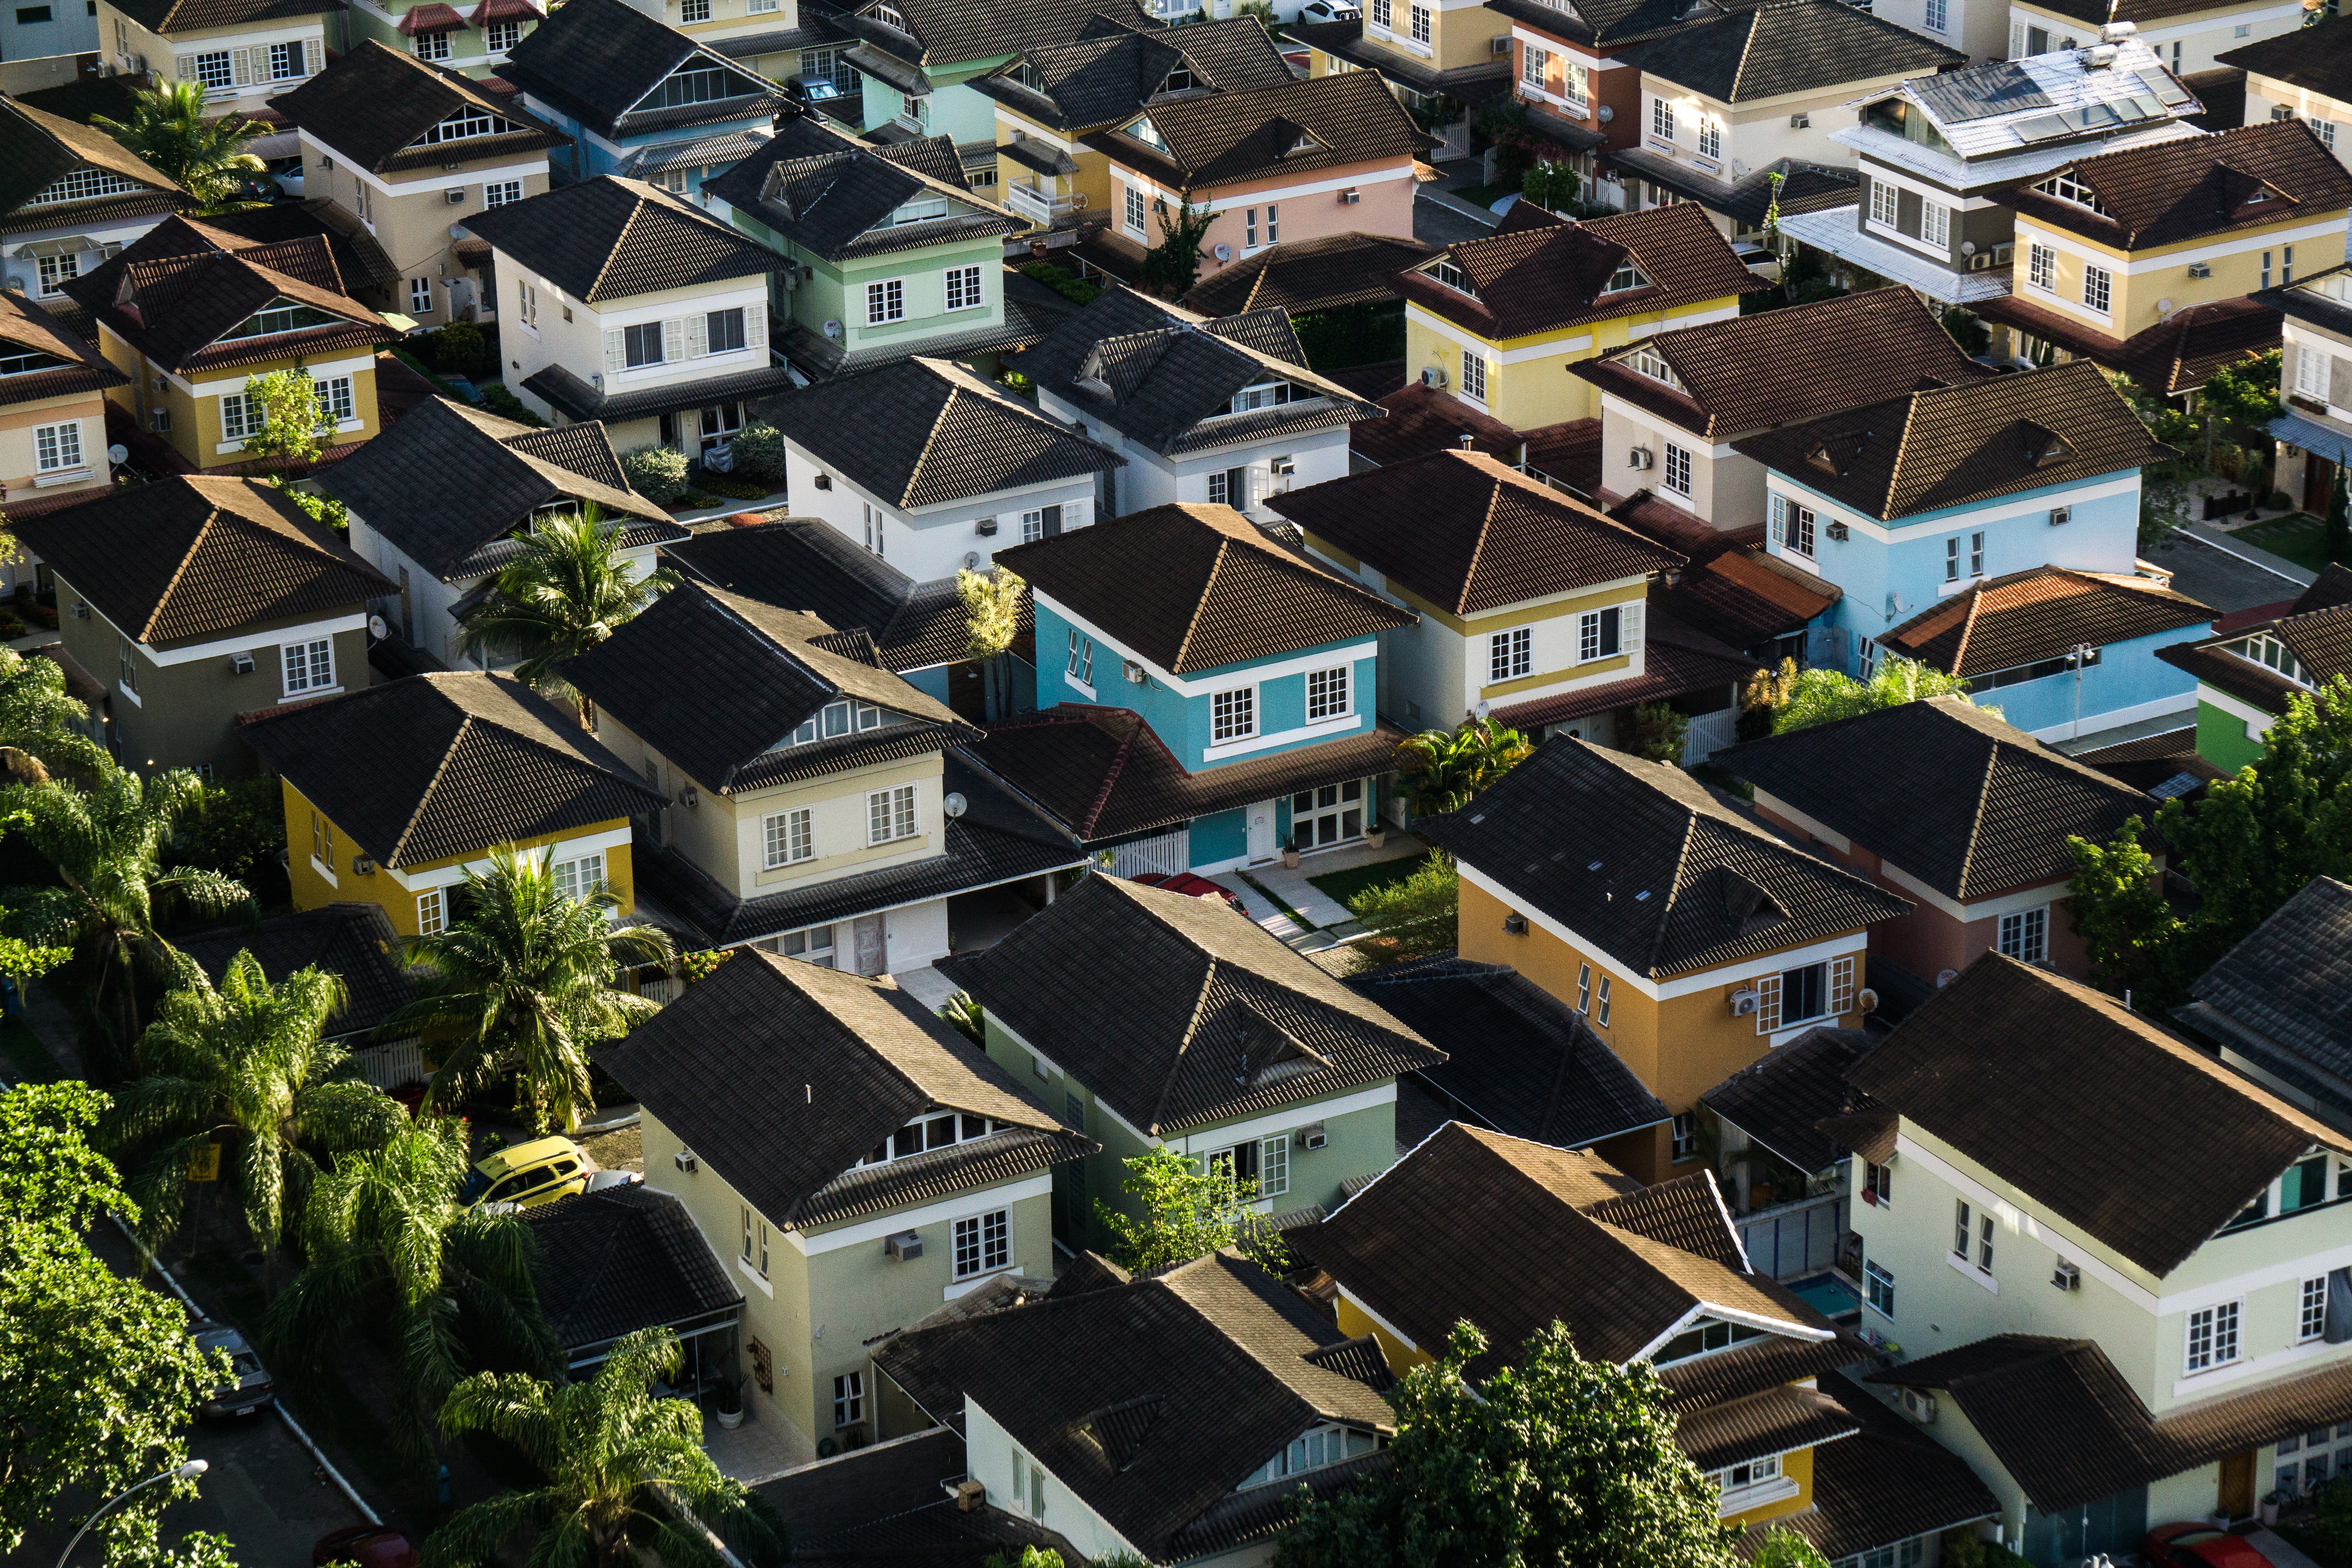 neighborhood homes with shingle roofs